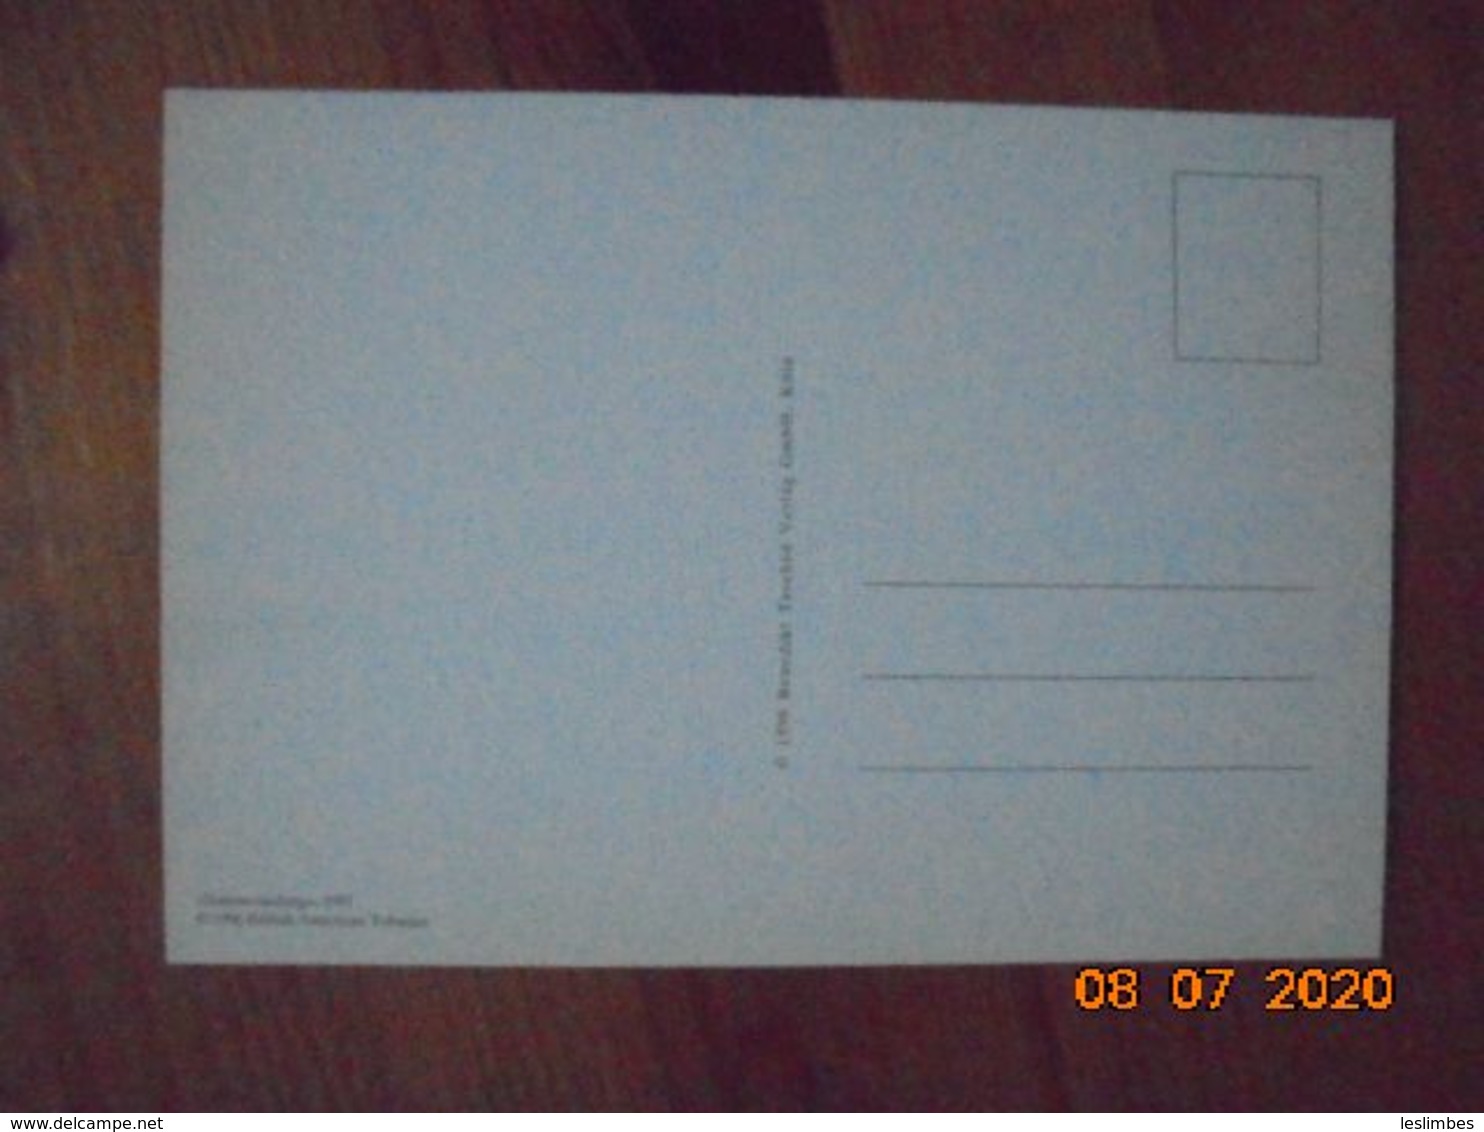 Carte Postale Publicitaire Allemand (Taschen 1996) 16,3 X 11,4 Cm. Lucky Strike. Sonst Nichts. "Sommeranfang" 1991 - Objets Publicitaires